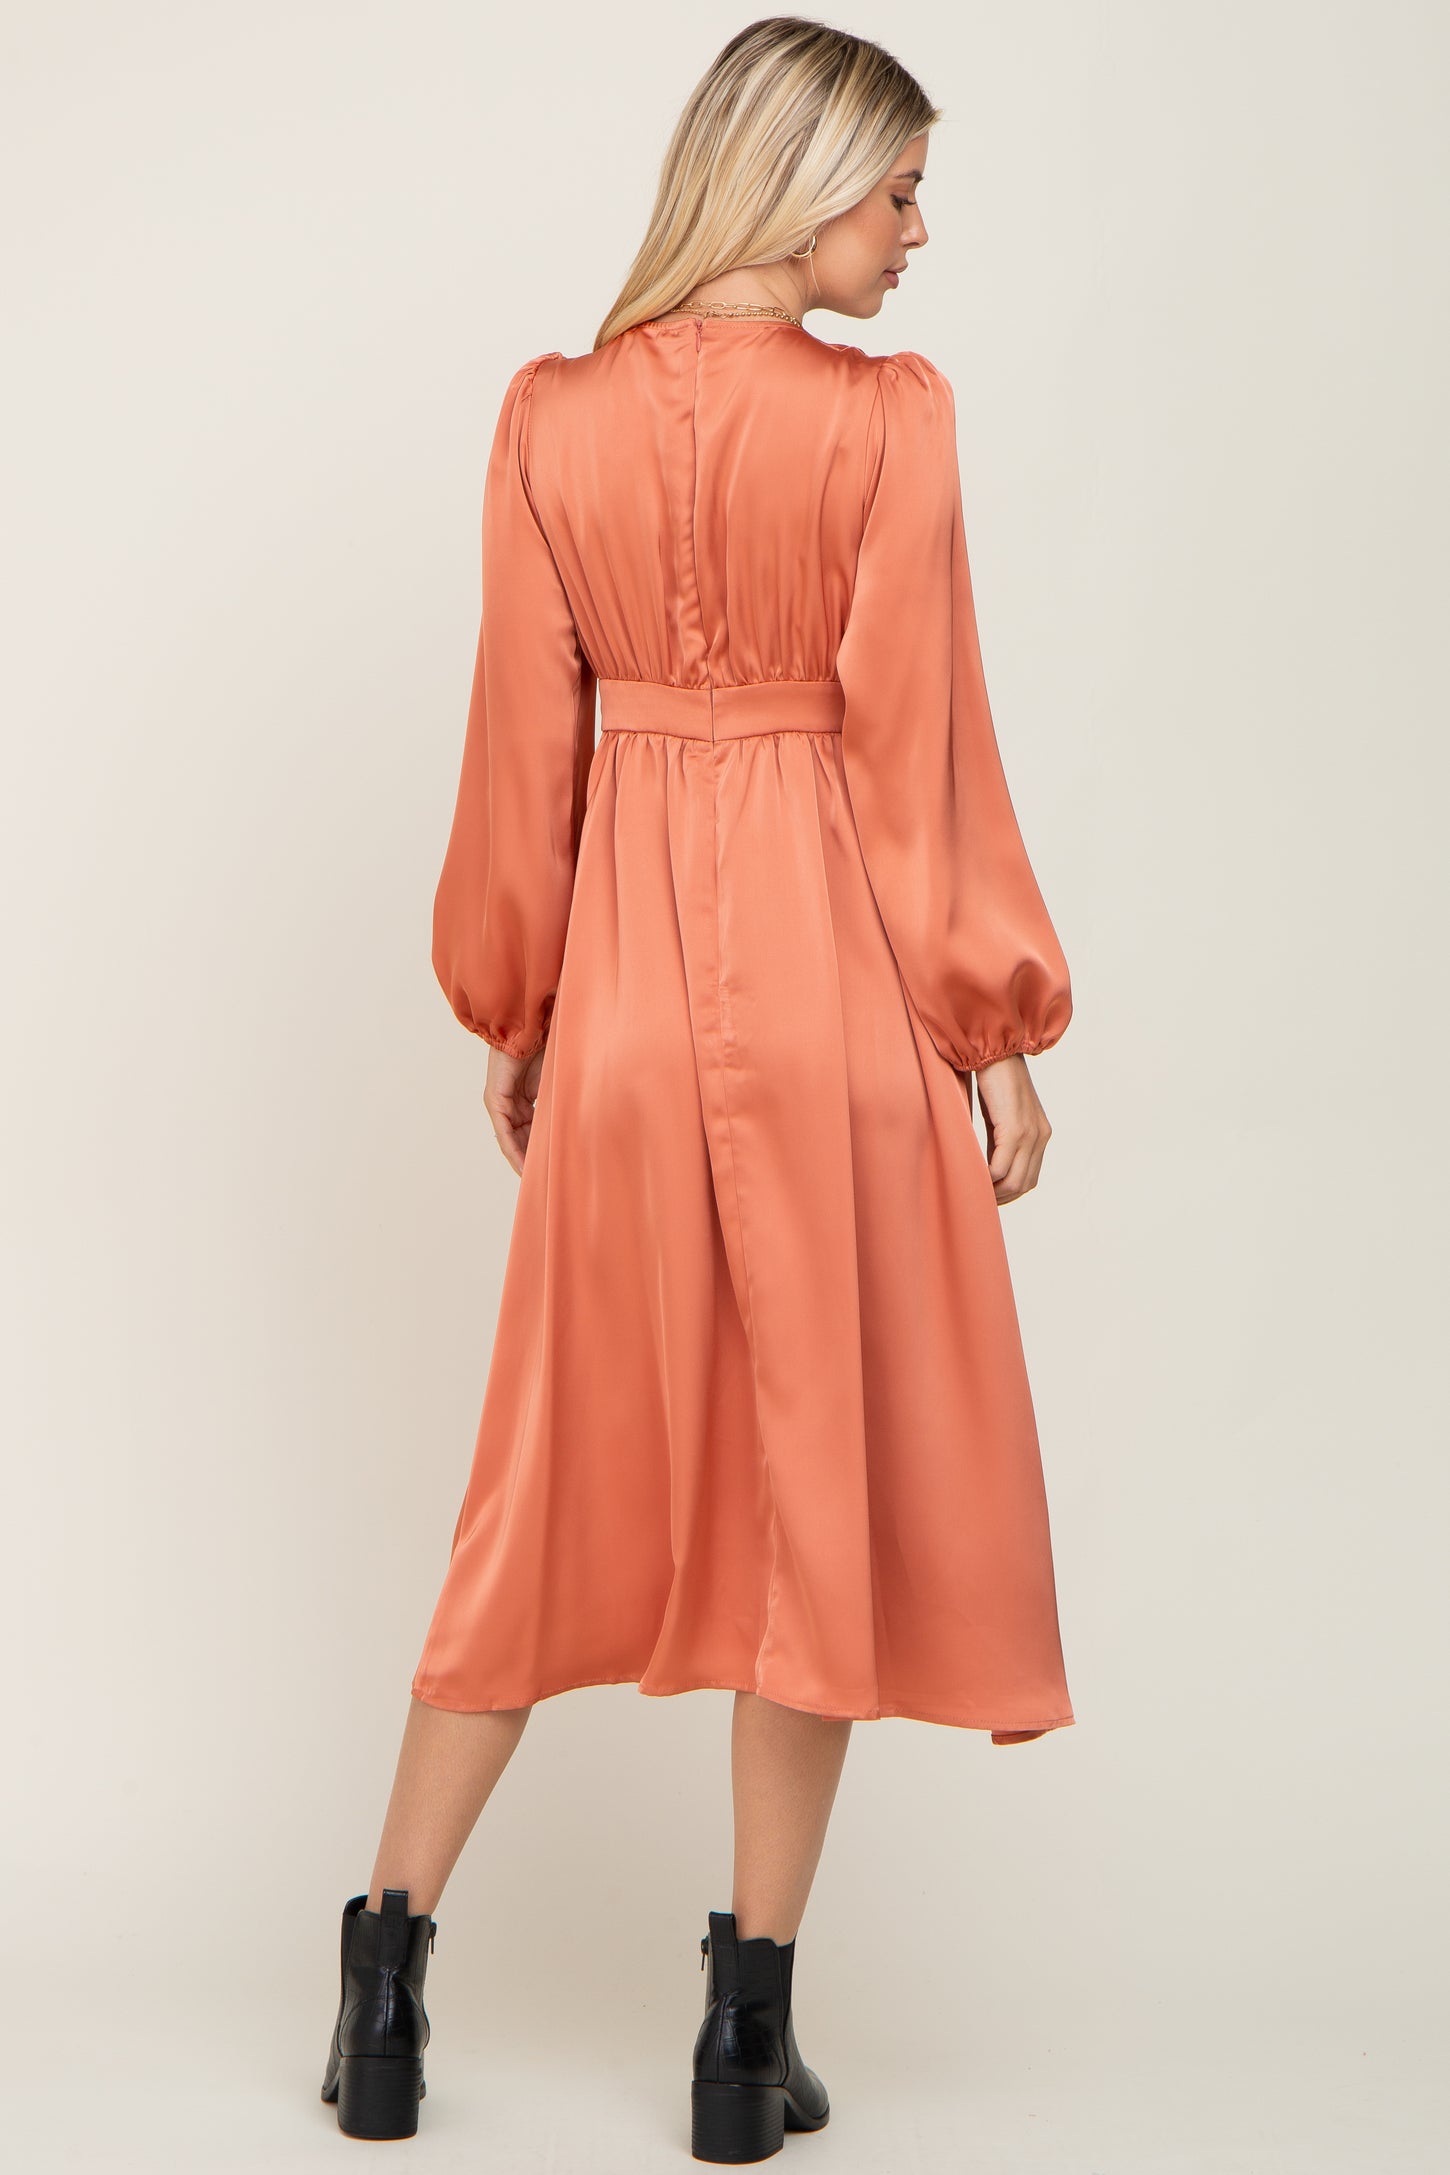 Orange Satin Tie Front Cutout Midi Dress